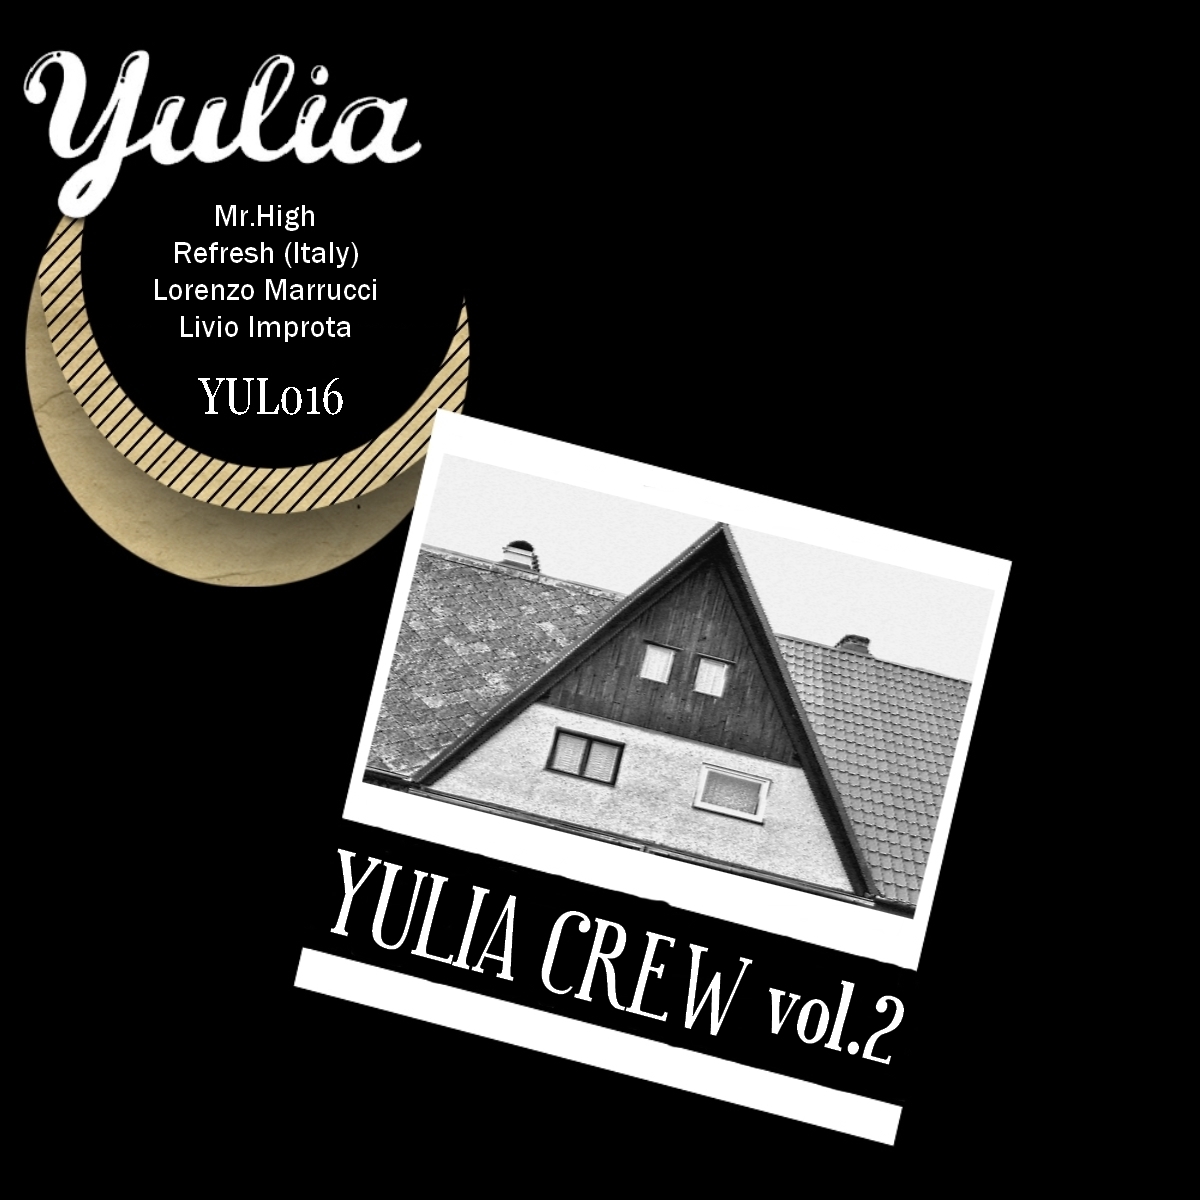 image cover: VA - Yulia Crew Vol. 2 (YUL016)